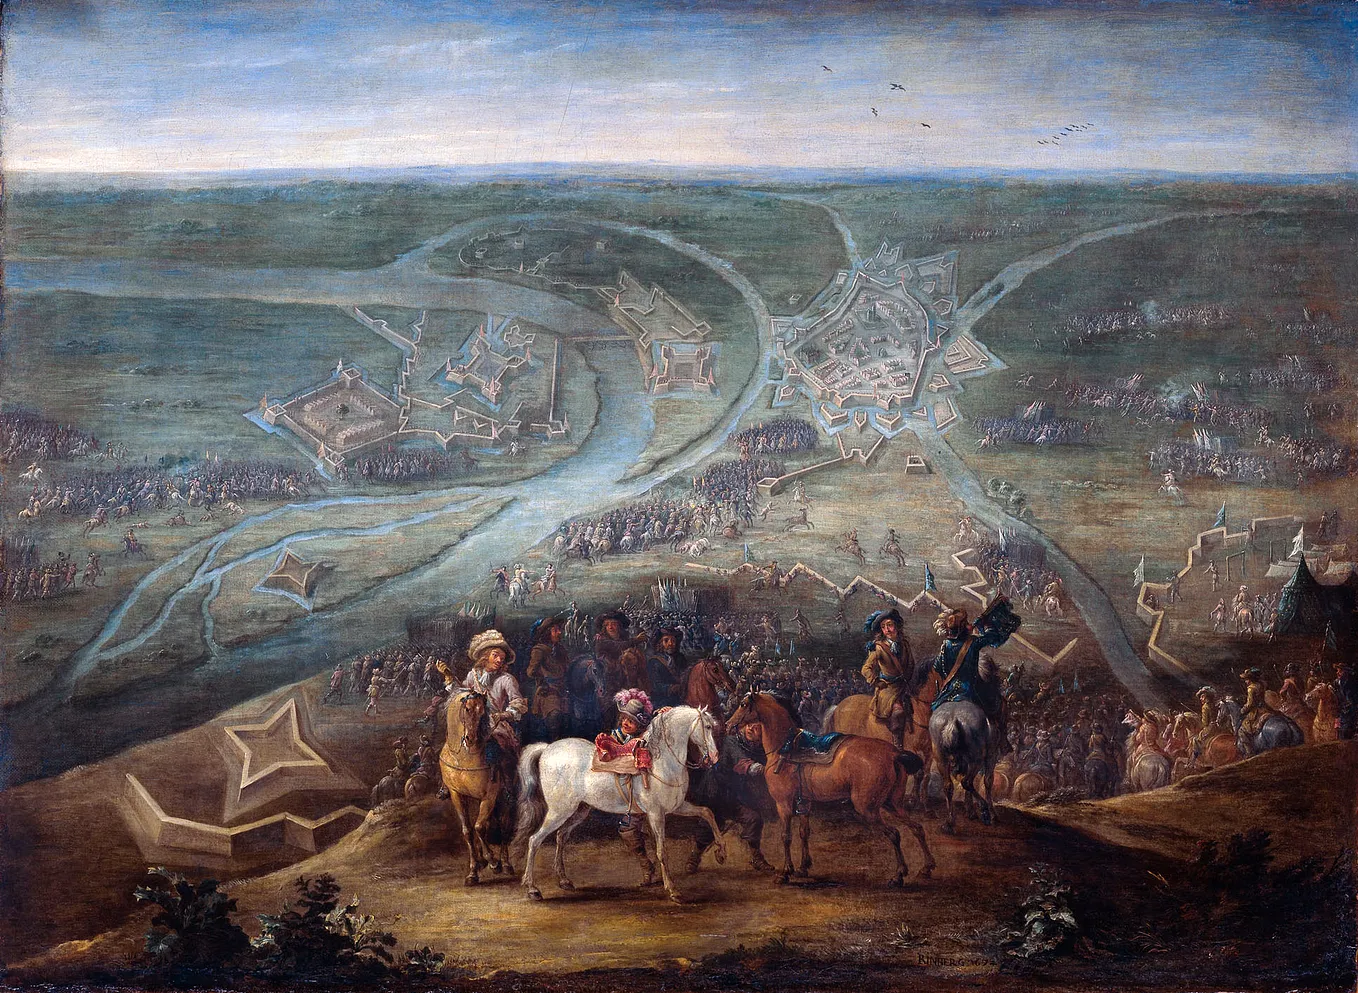 The Battle Map Landscapes of Lambert de Hondt